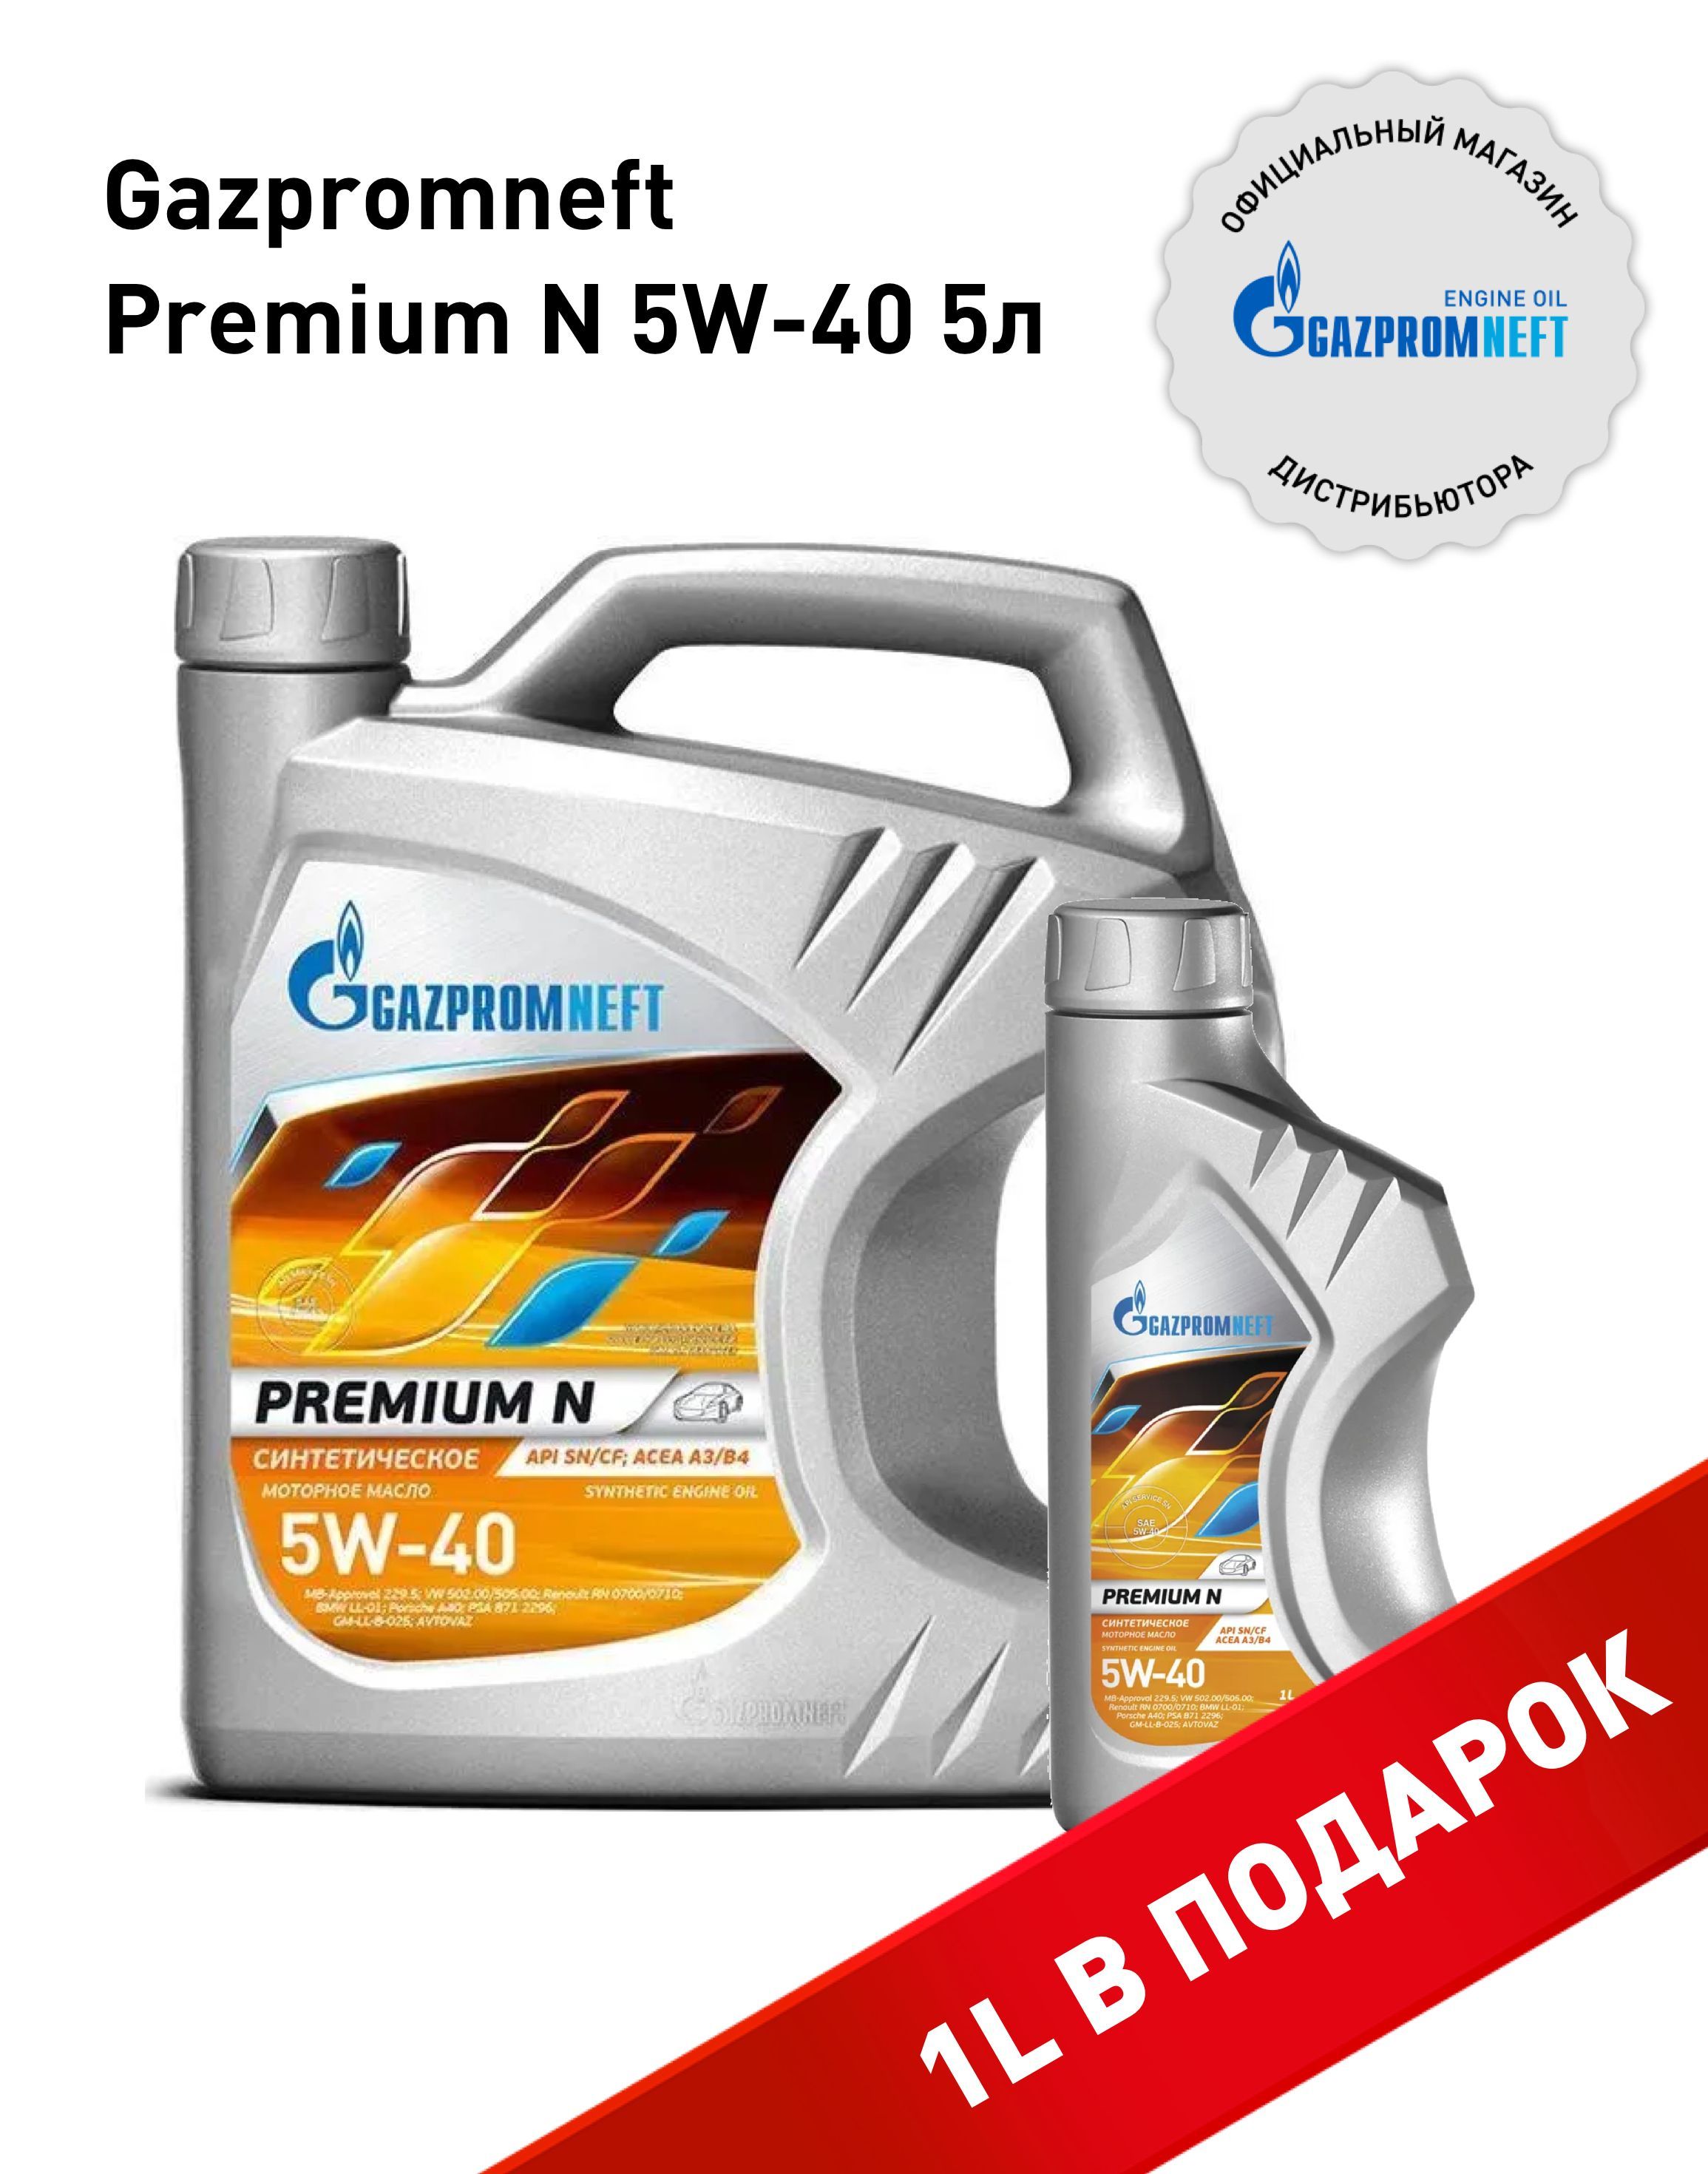 Масло газпромнефть premium n 5w40. Масло Premium n 5w-40 4л Gazpromneft.